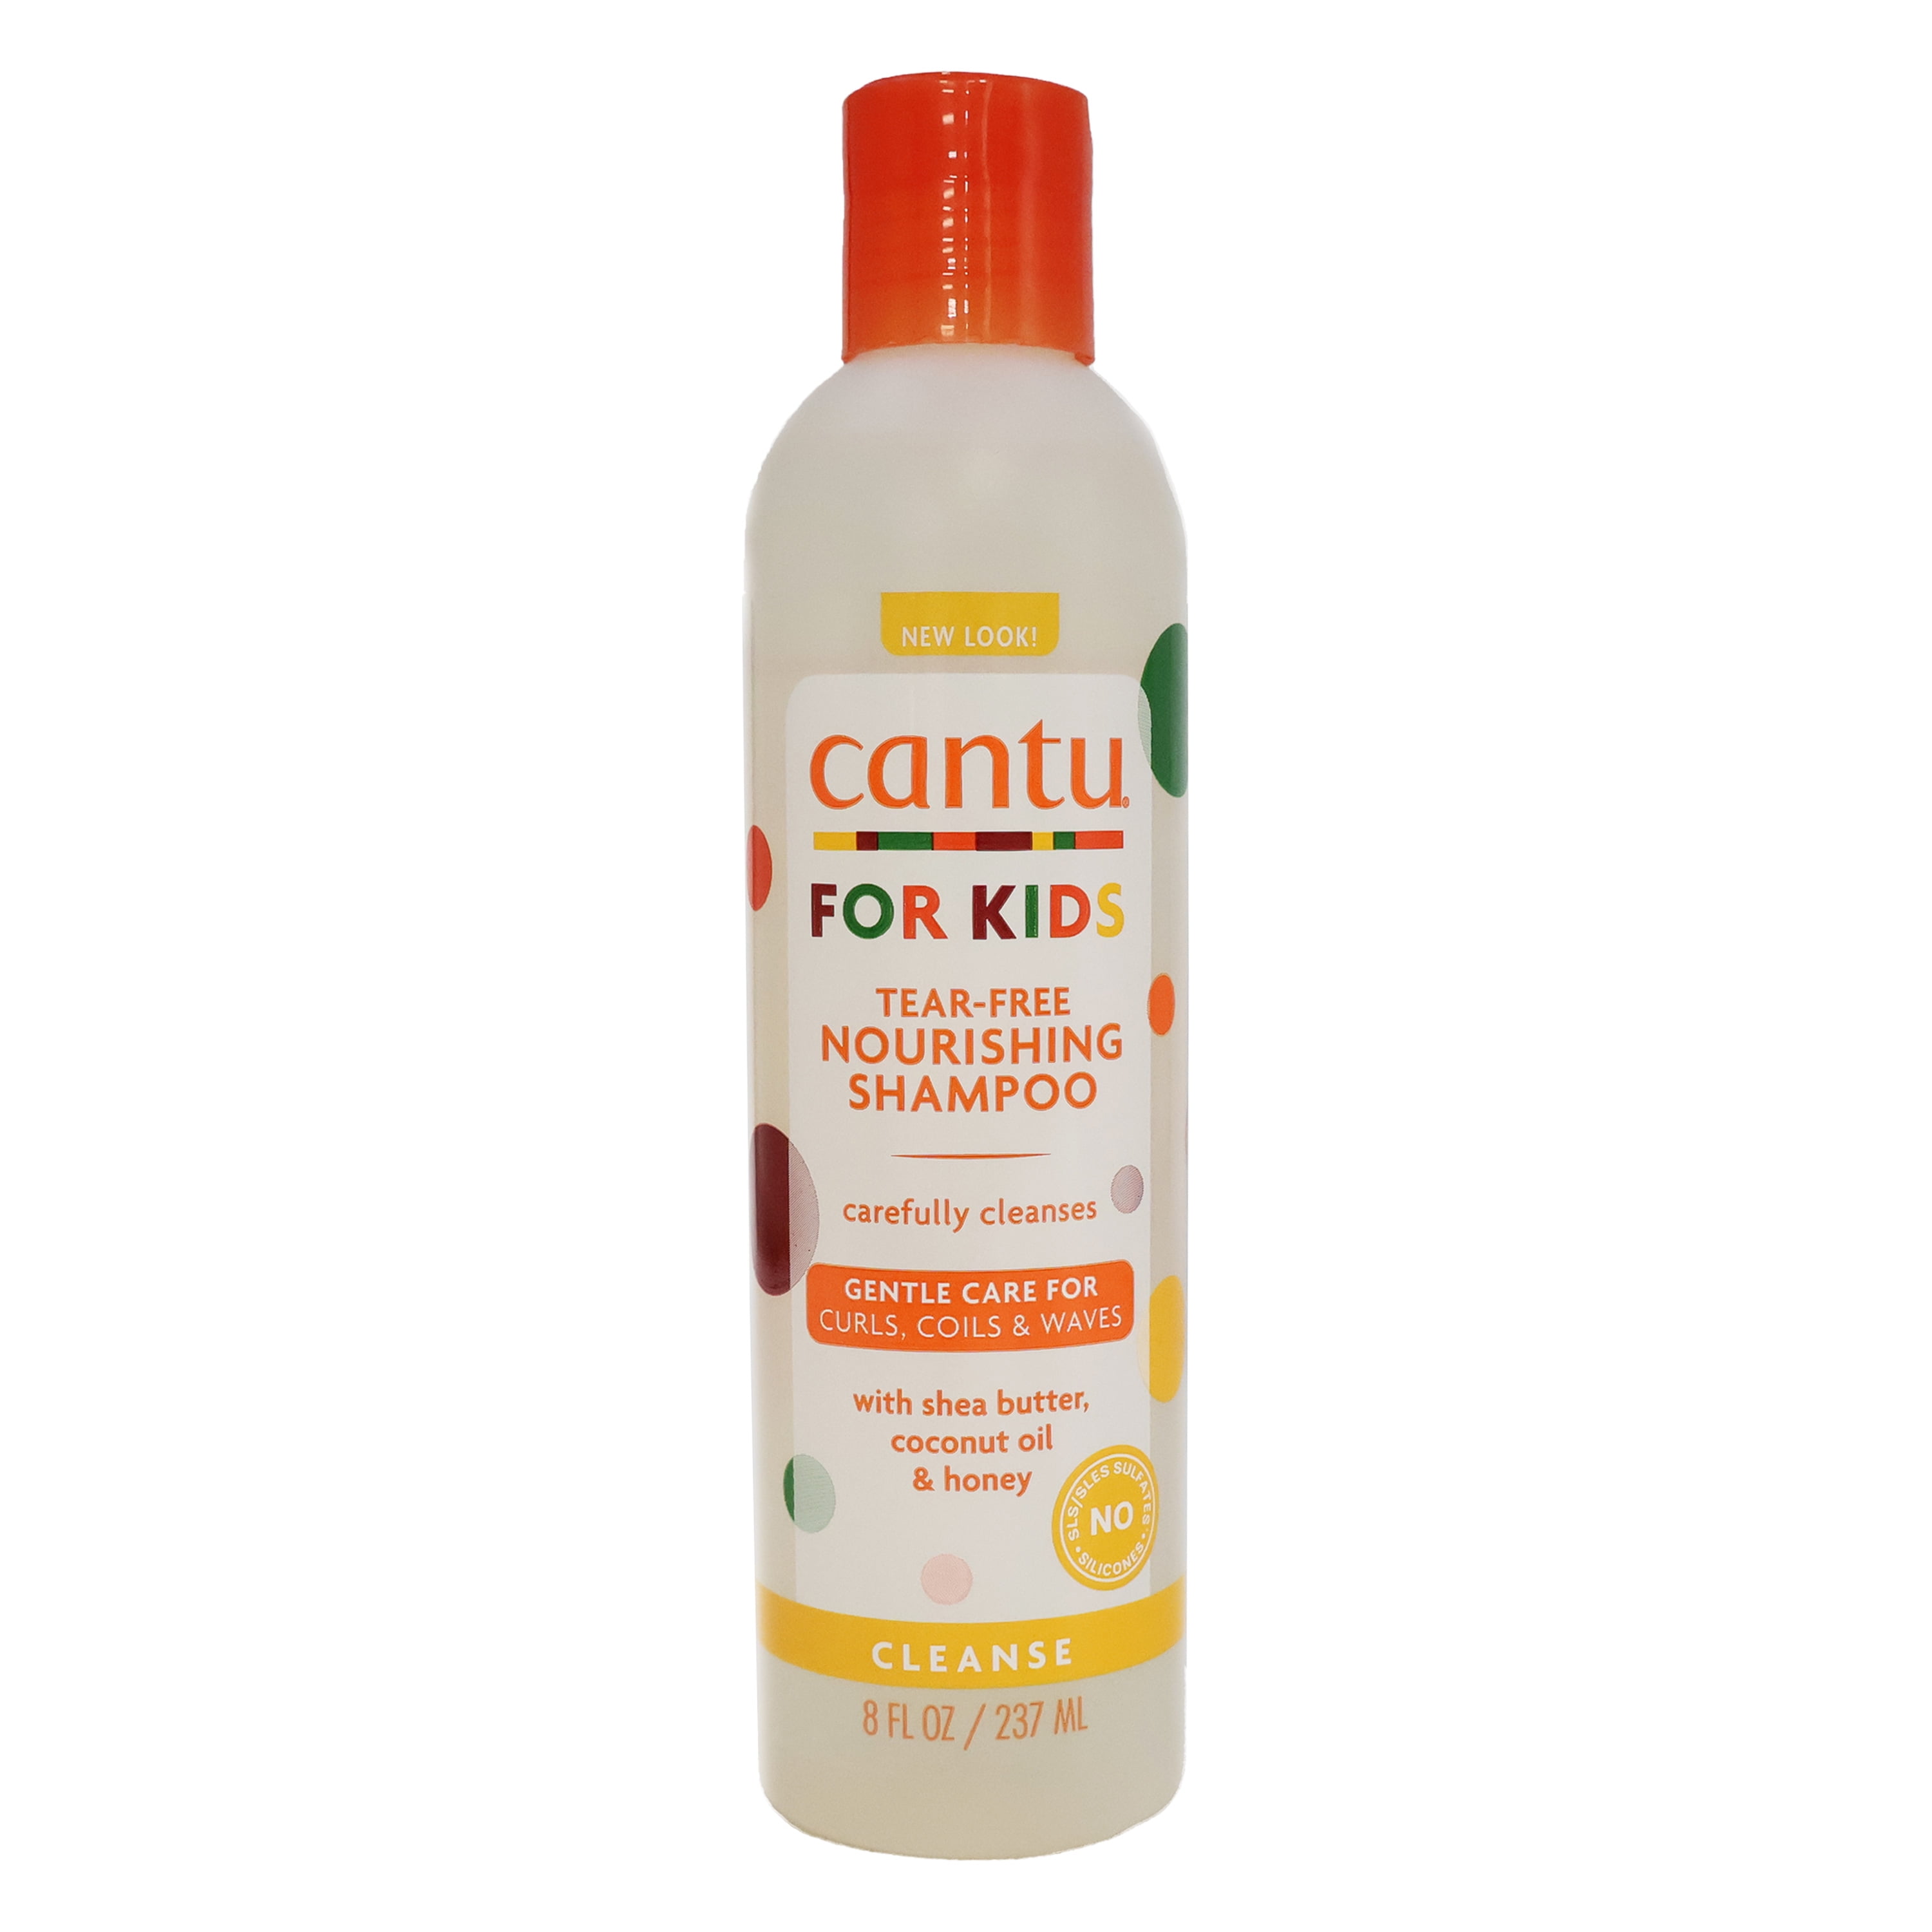 Cantu Care for Kids Tear-Free Nourishing Shampoo with Shea Butter, 8 fl oz  